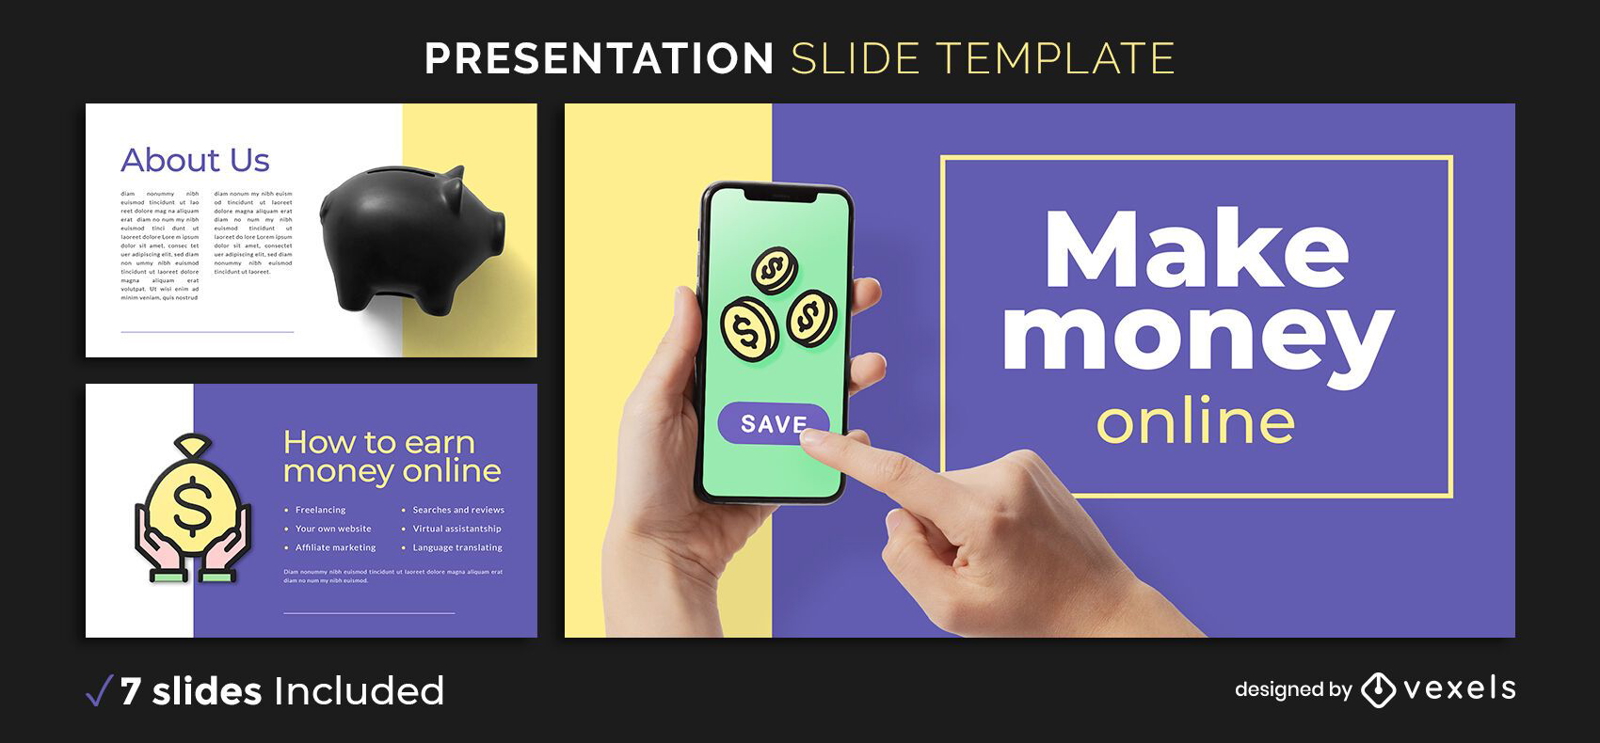 Make money online presentation template